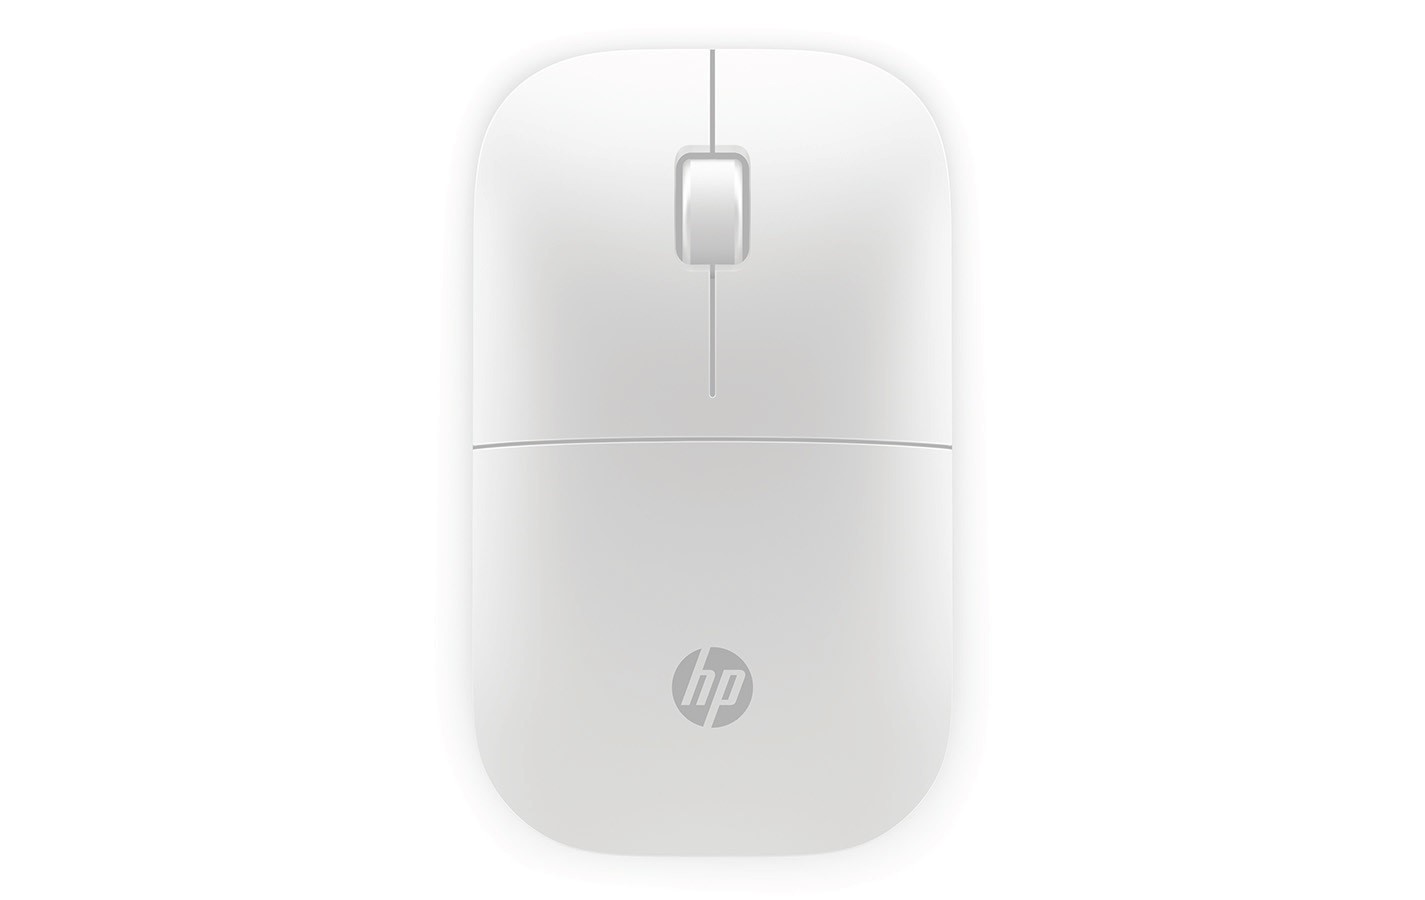 HP Z3700 Wireless Mouse - Blizzard White V0L80AA